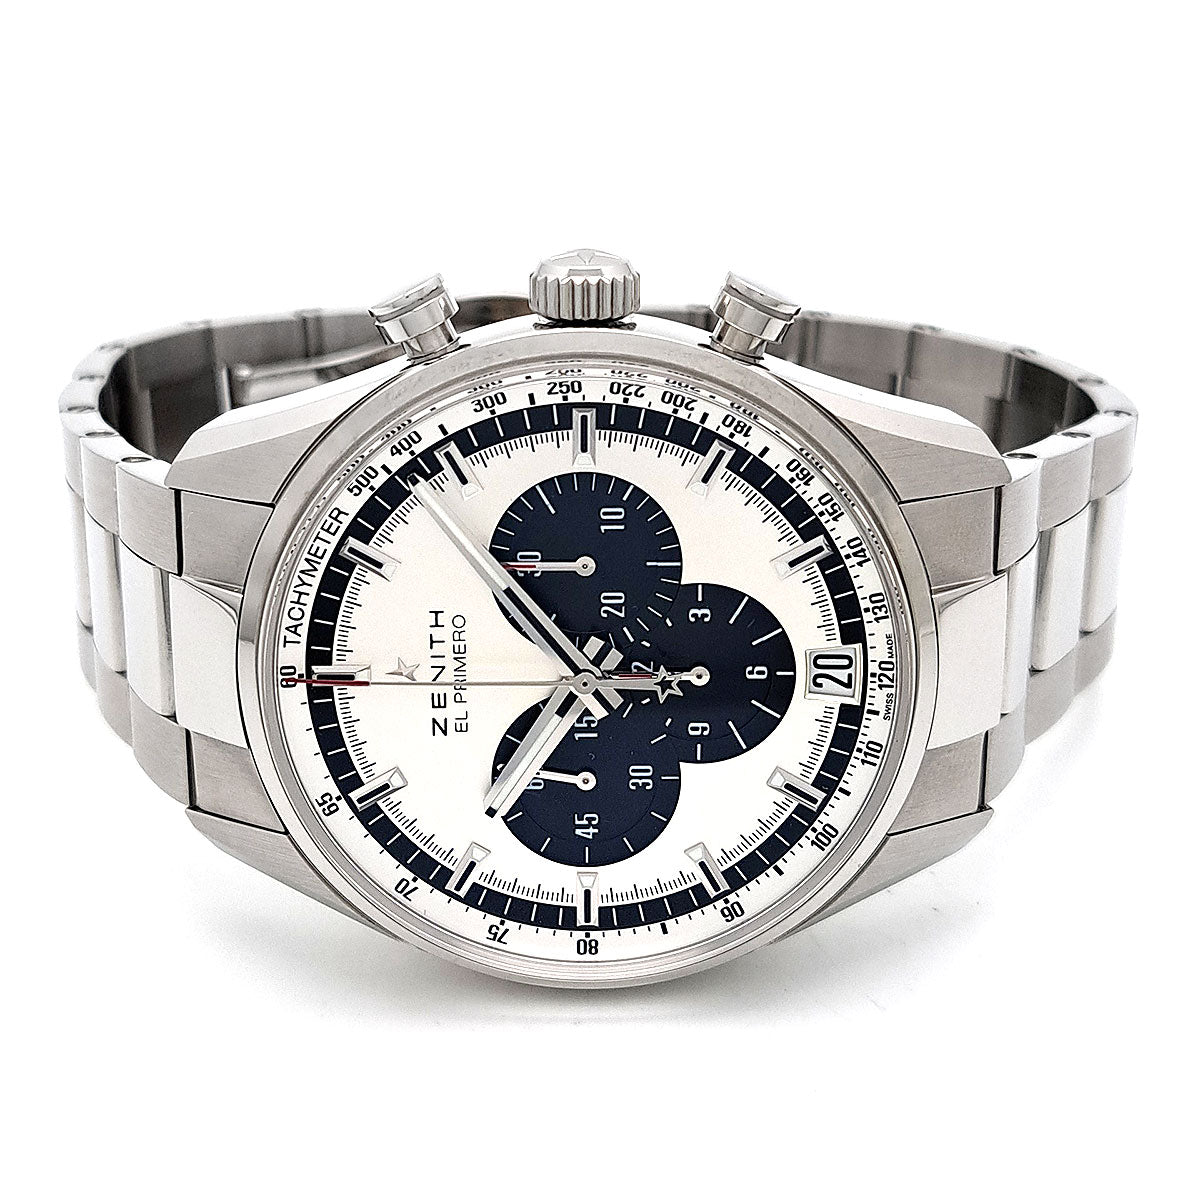 Zenith "Chronomaster El Primero" Men's Automatic Wristwatch in Stainless Steel 03.2045.400/22.C496